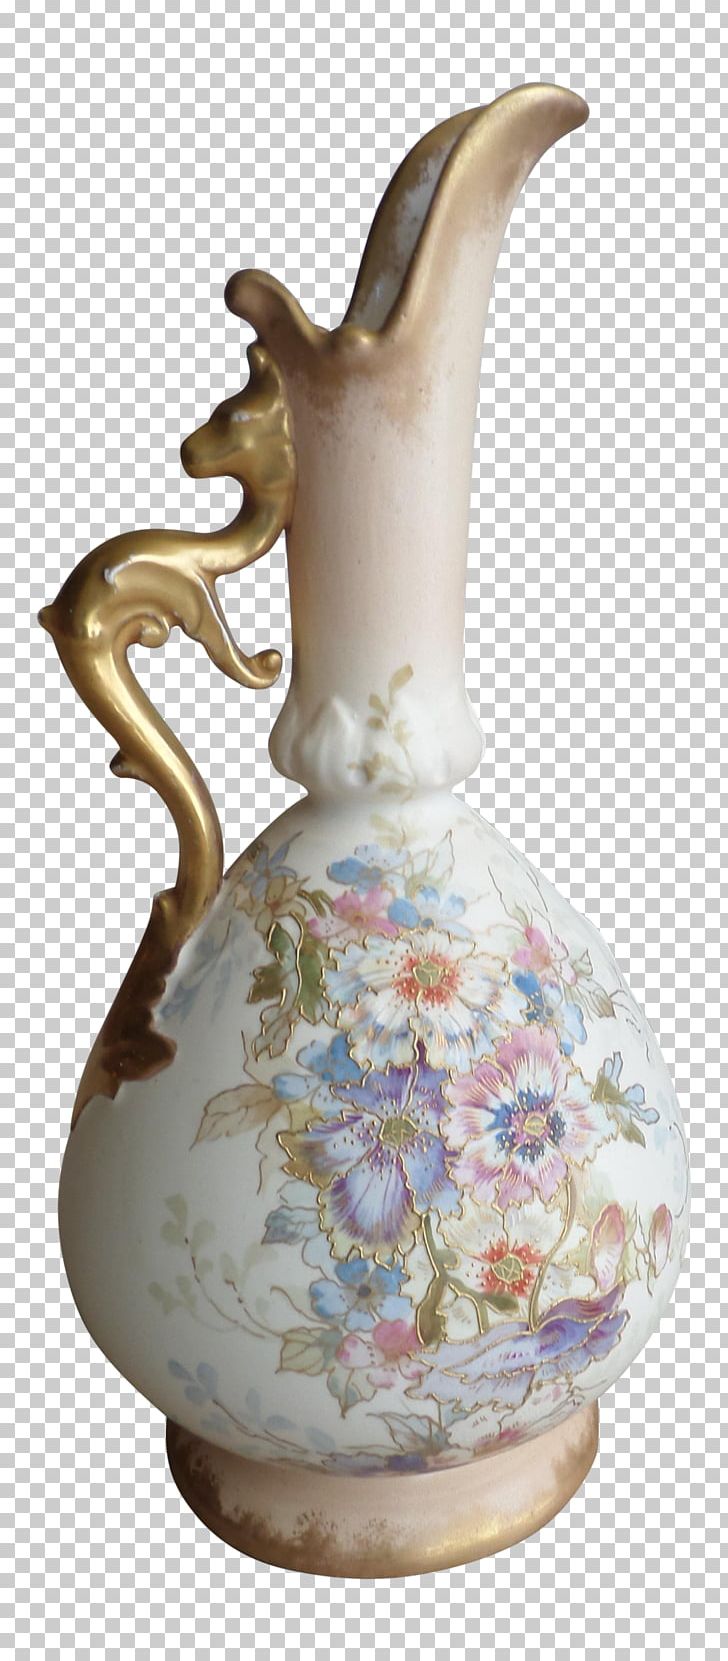 Jug Vase Pitcher Porcelain Bonn PNG, Clipart, Antique, Artifact, Bonn, Book, Ceramic Free PNG Download